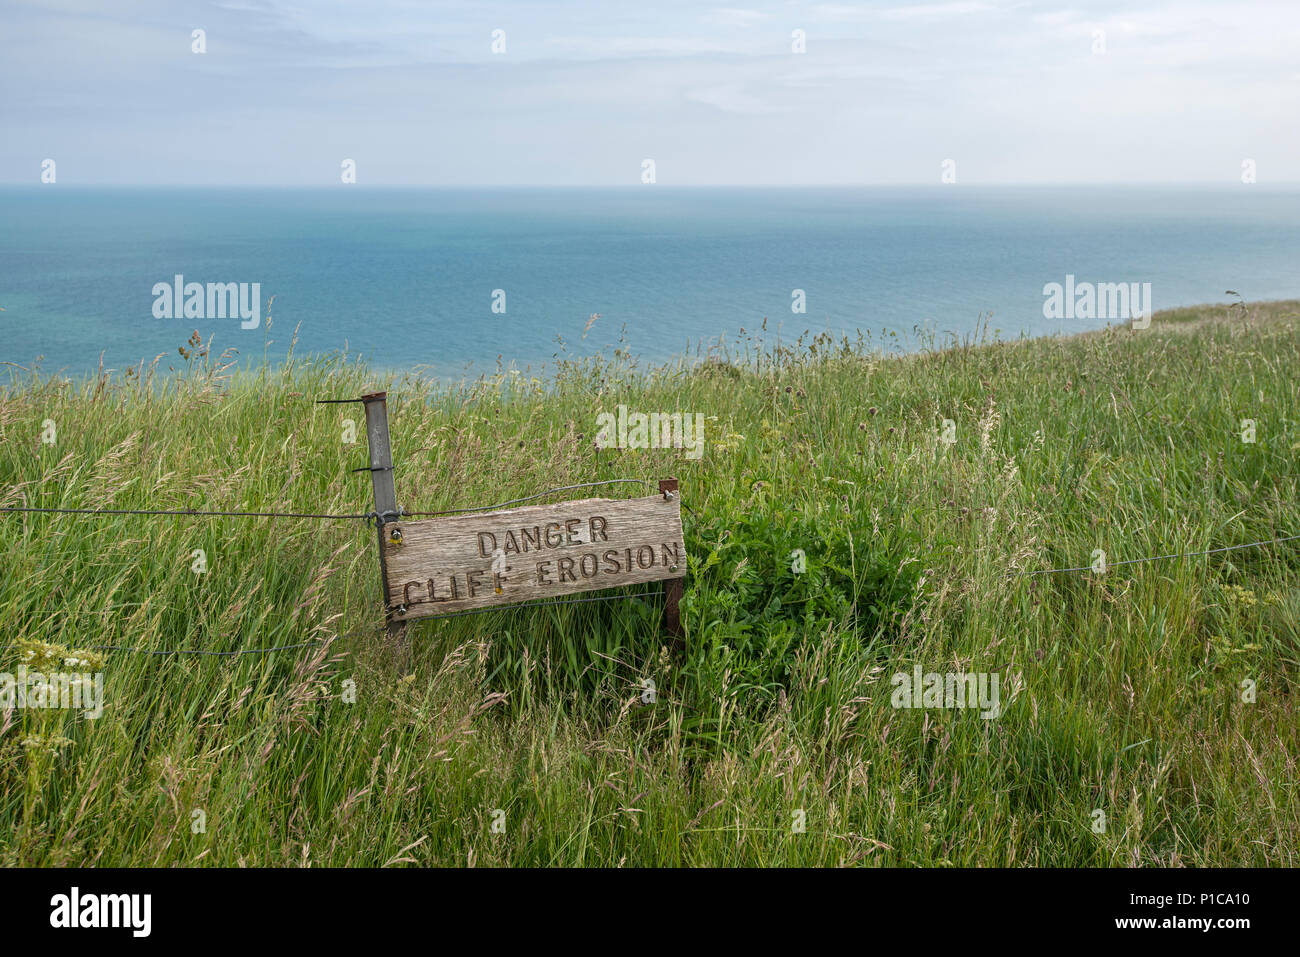 Cliff erosion sign, beach head, Sussex, uk Stock Photo